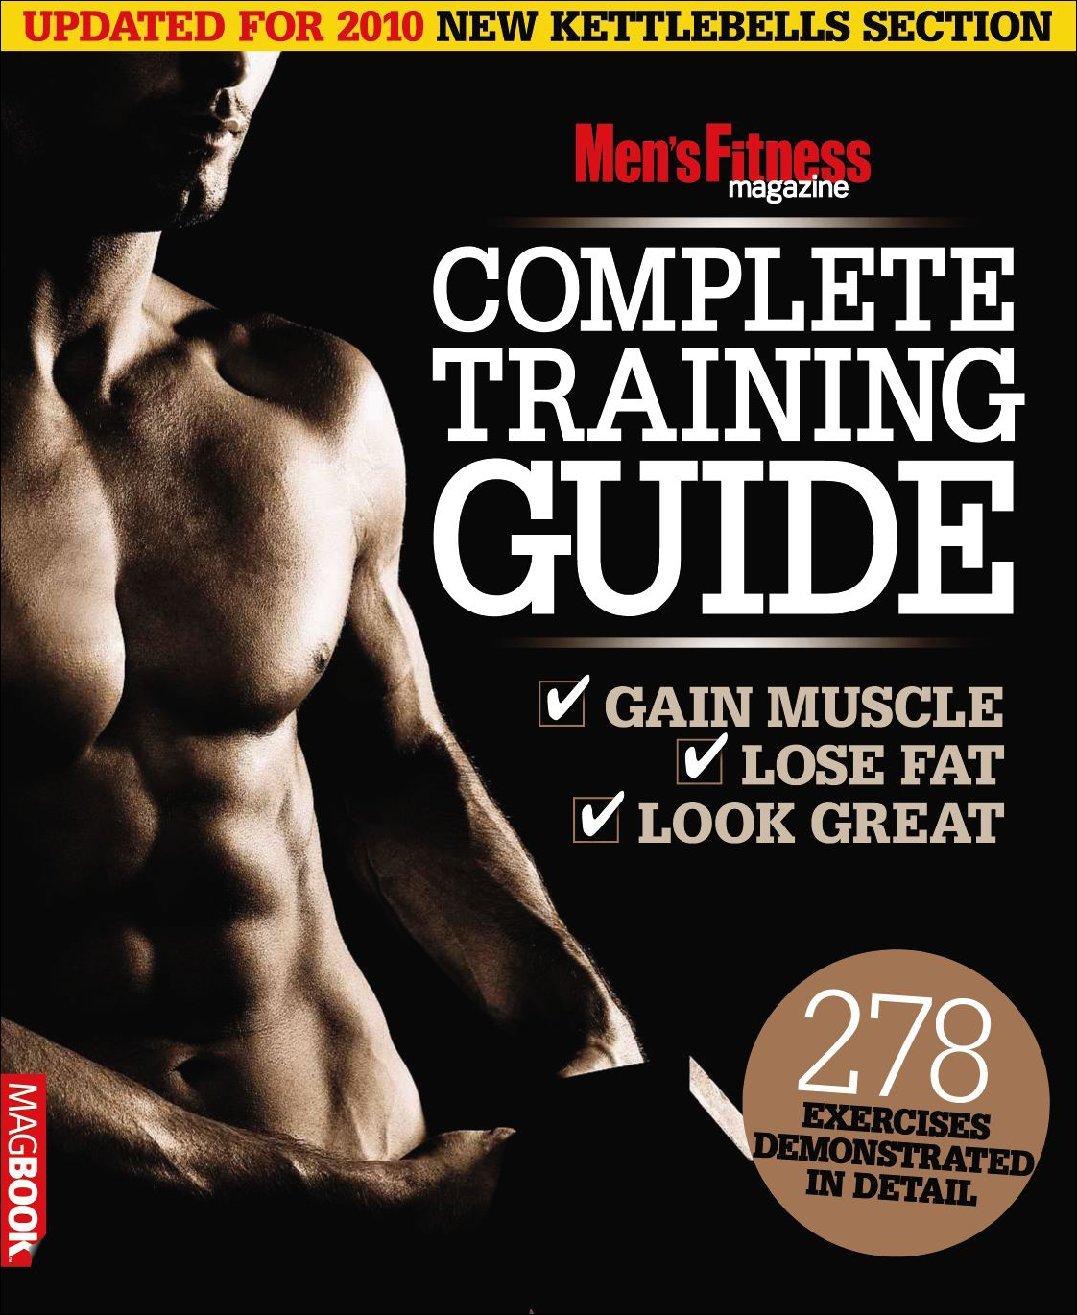 Completed Training. Guide man. Mens World журнал. Книга мини энциклопедия SAS фитнес.